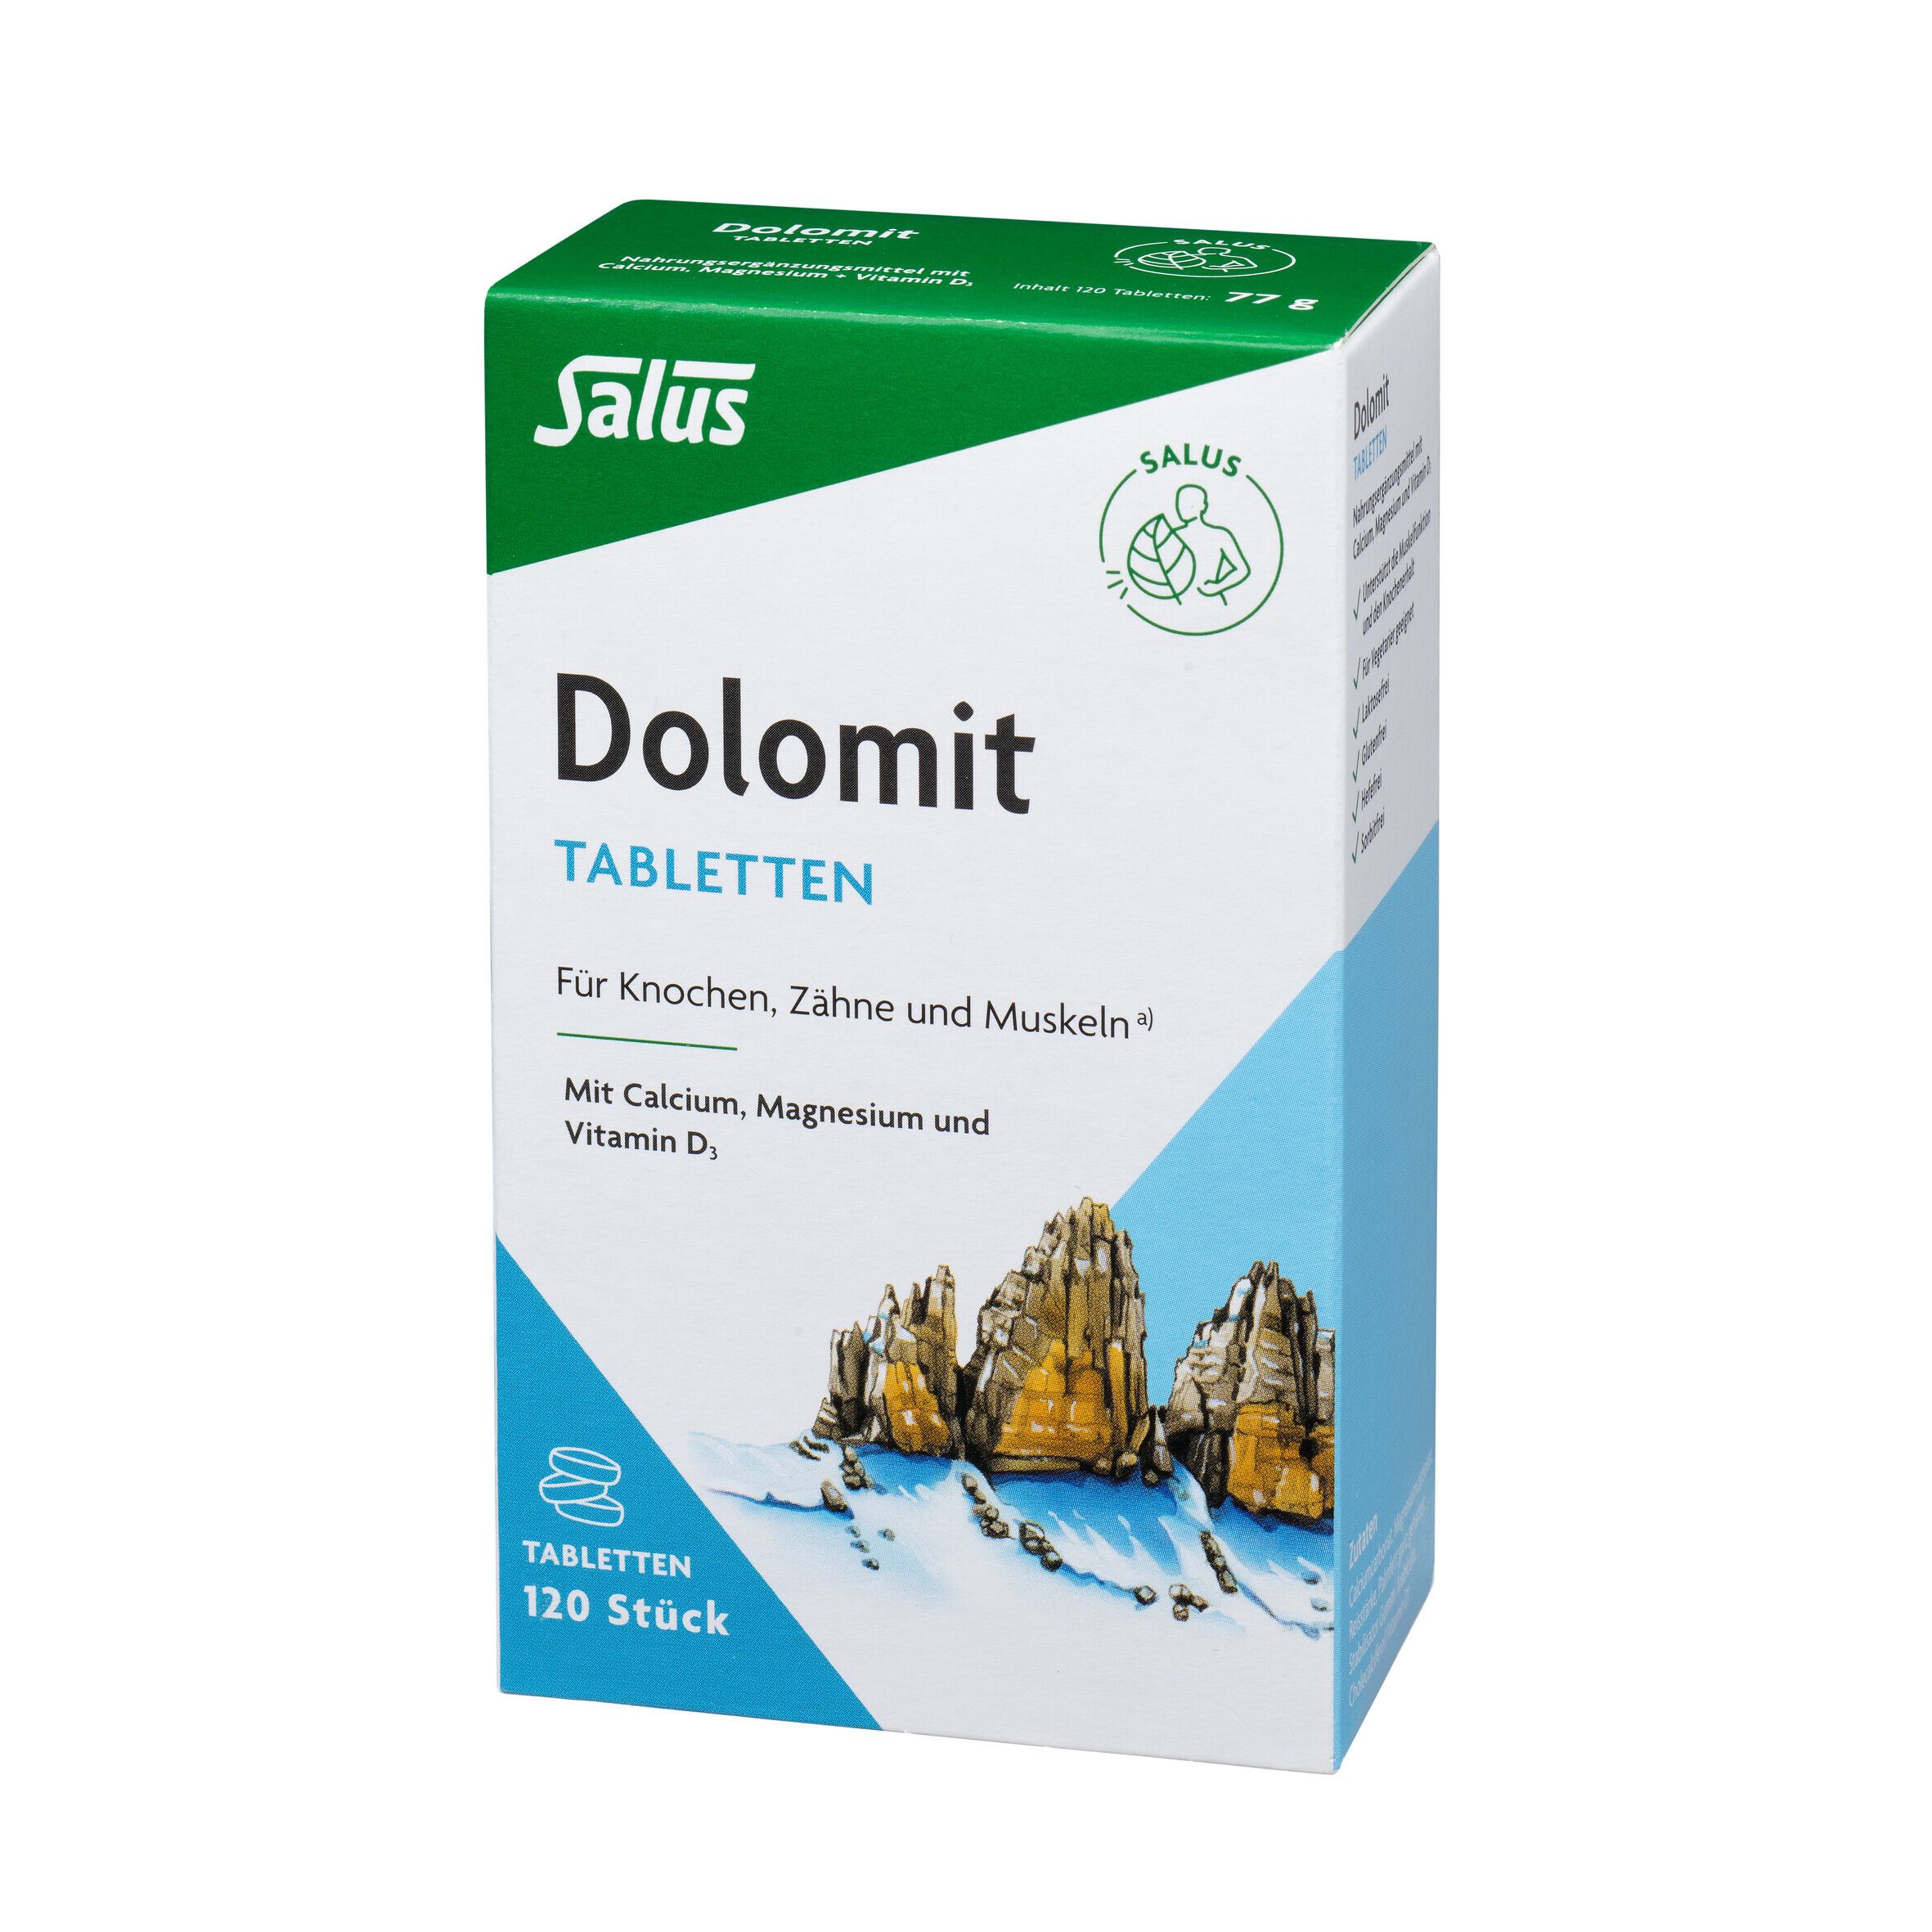 Salus® Dolomit